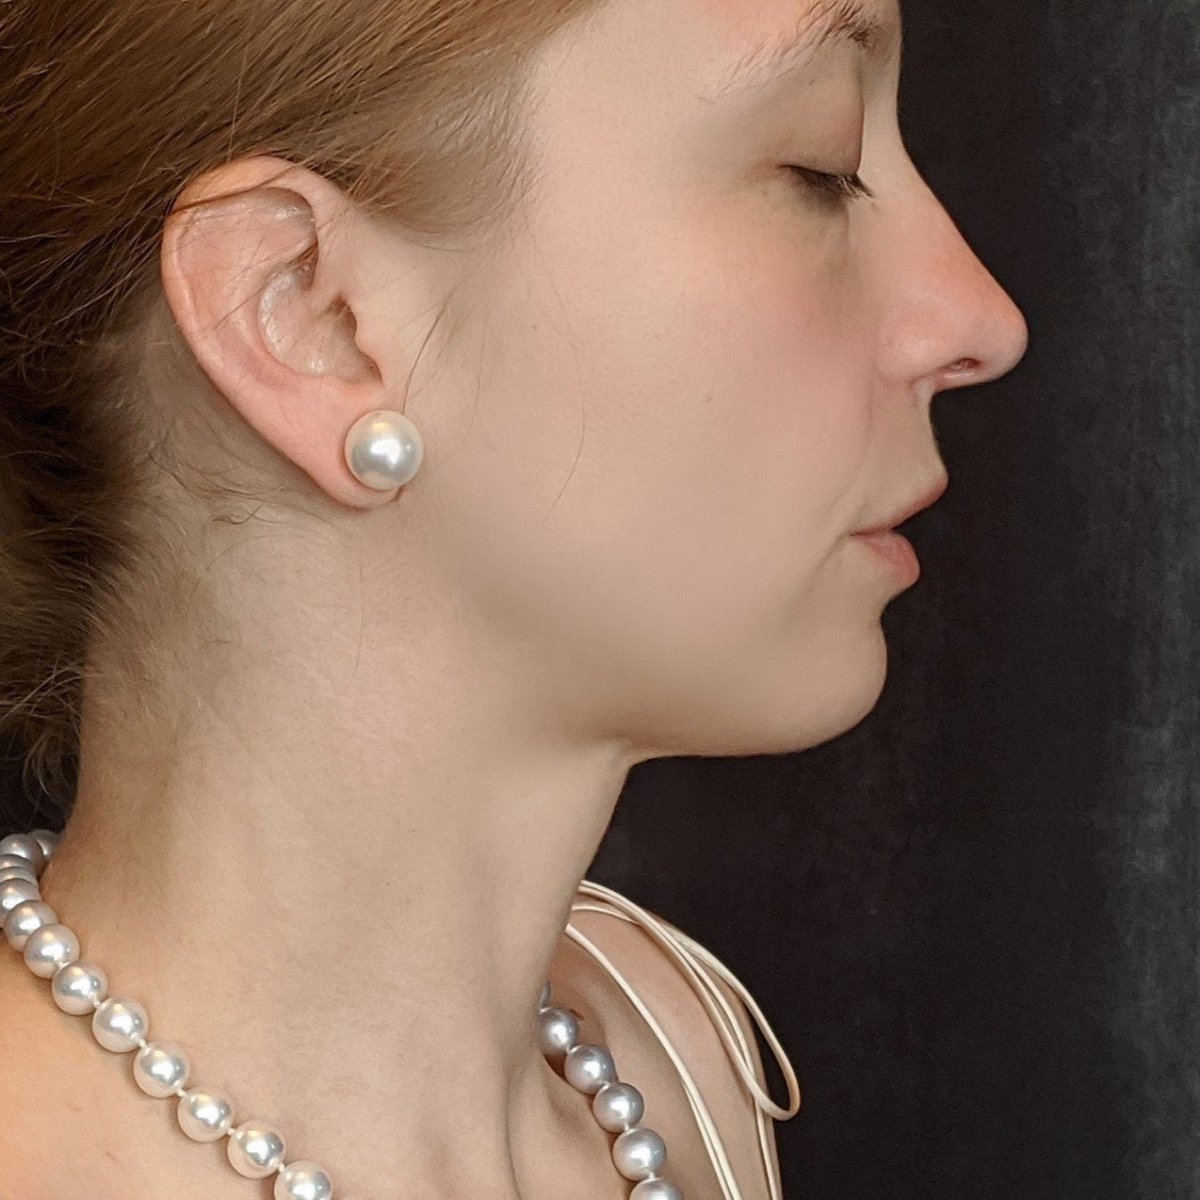 12-13mm Amazing White South Sea Pear Stud Earrings - Marina Korneev Fine Pearls